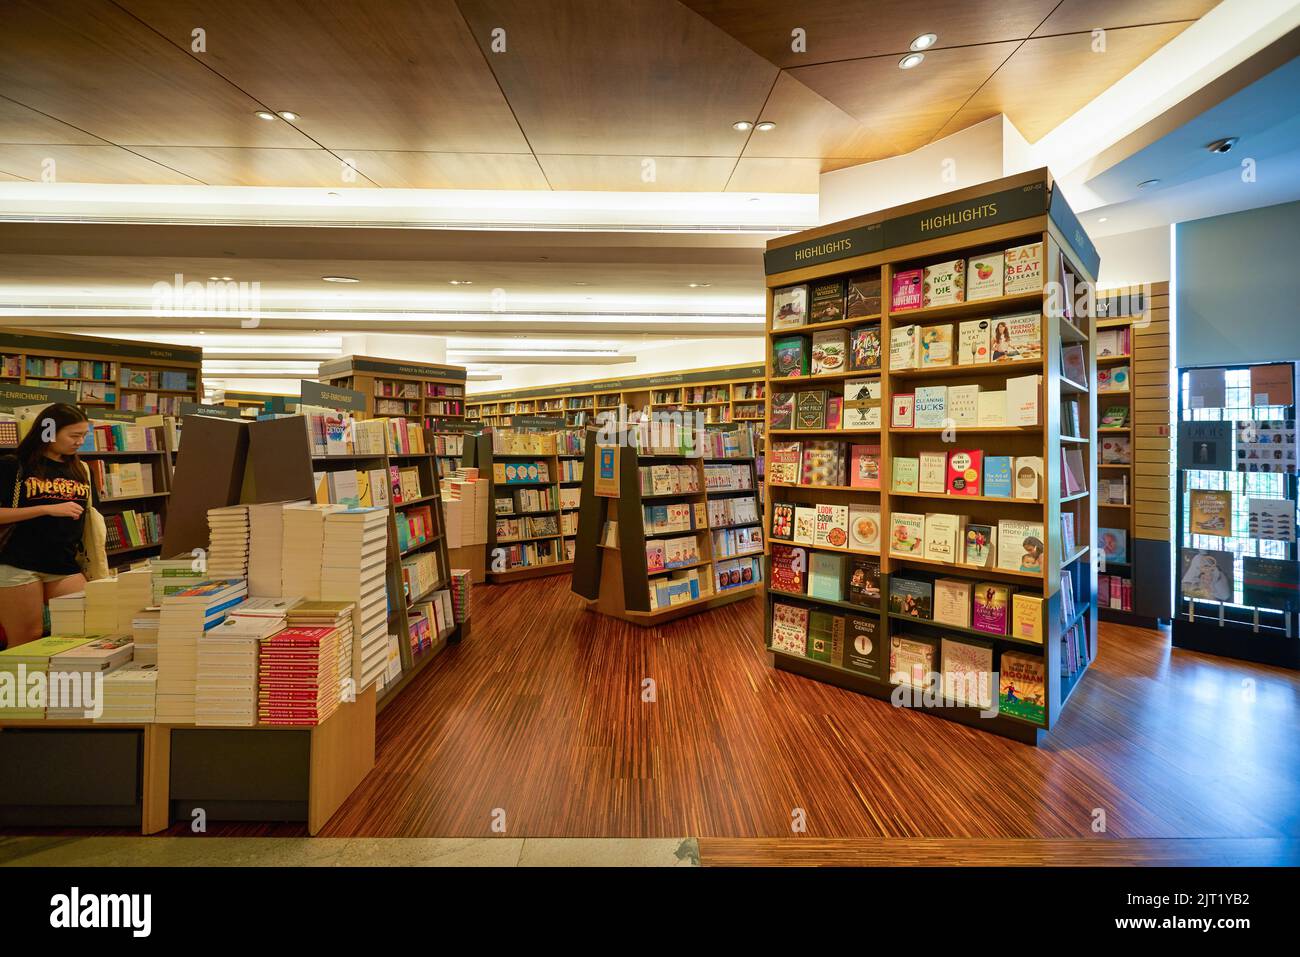 Kinokuniya — Kinokuniya Sydney offers a large range of books with